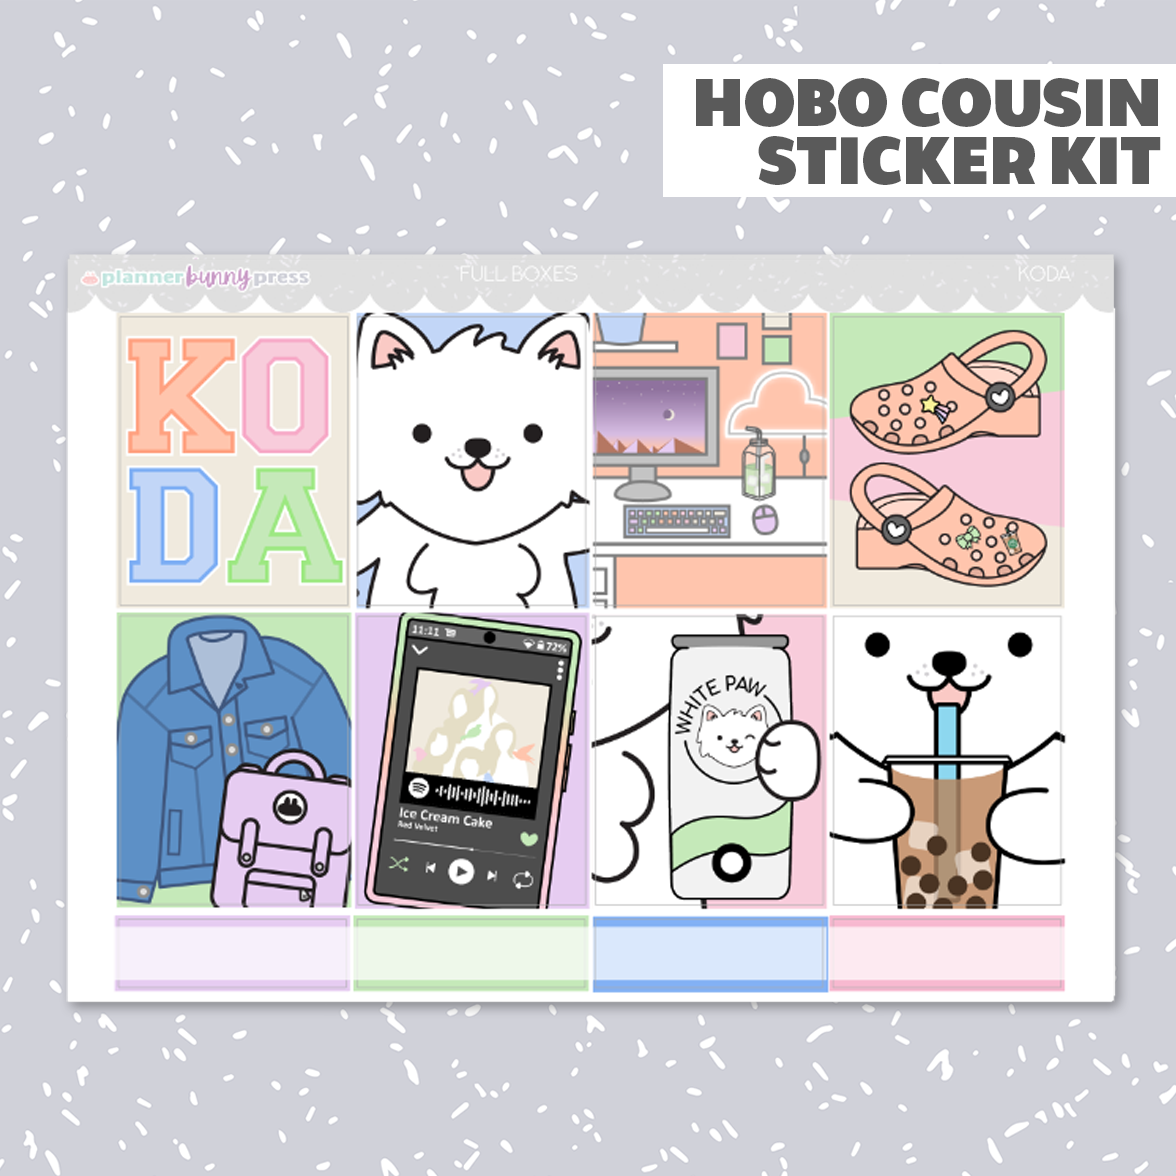 Koda | Hobonichi Cousin Sticker Kit